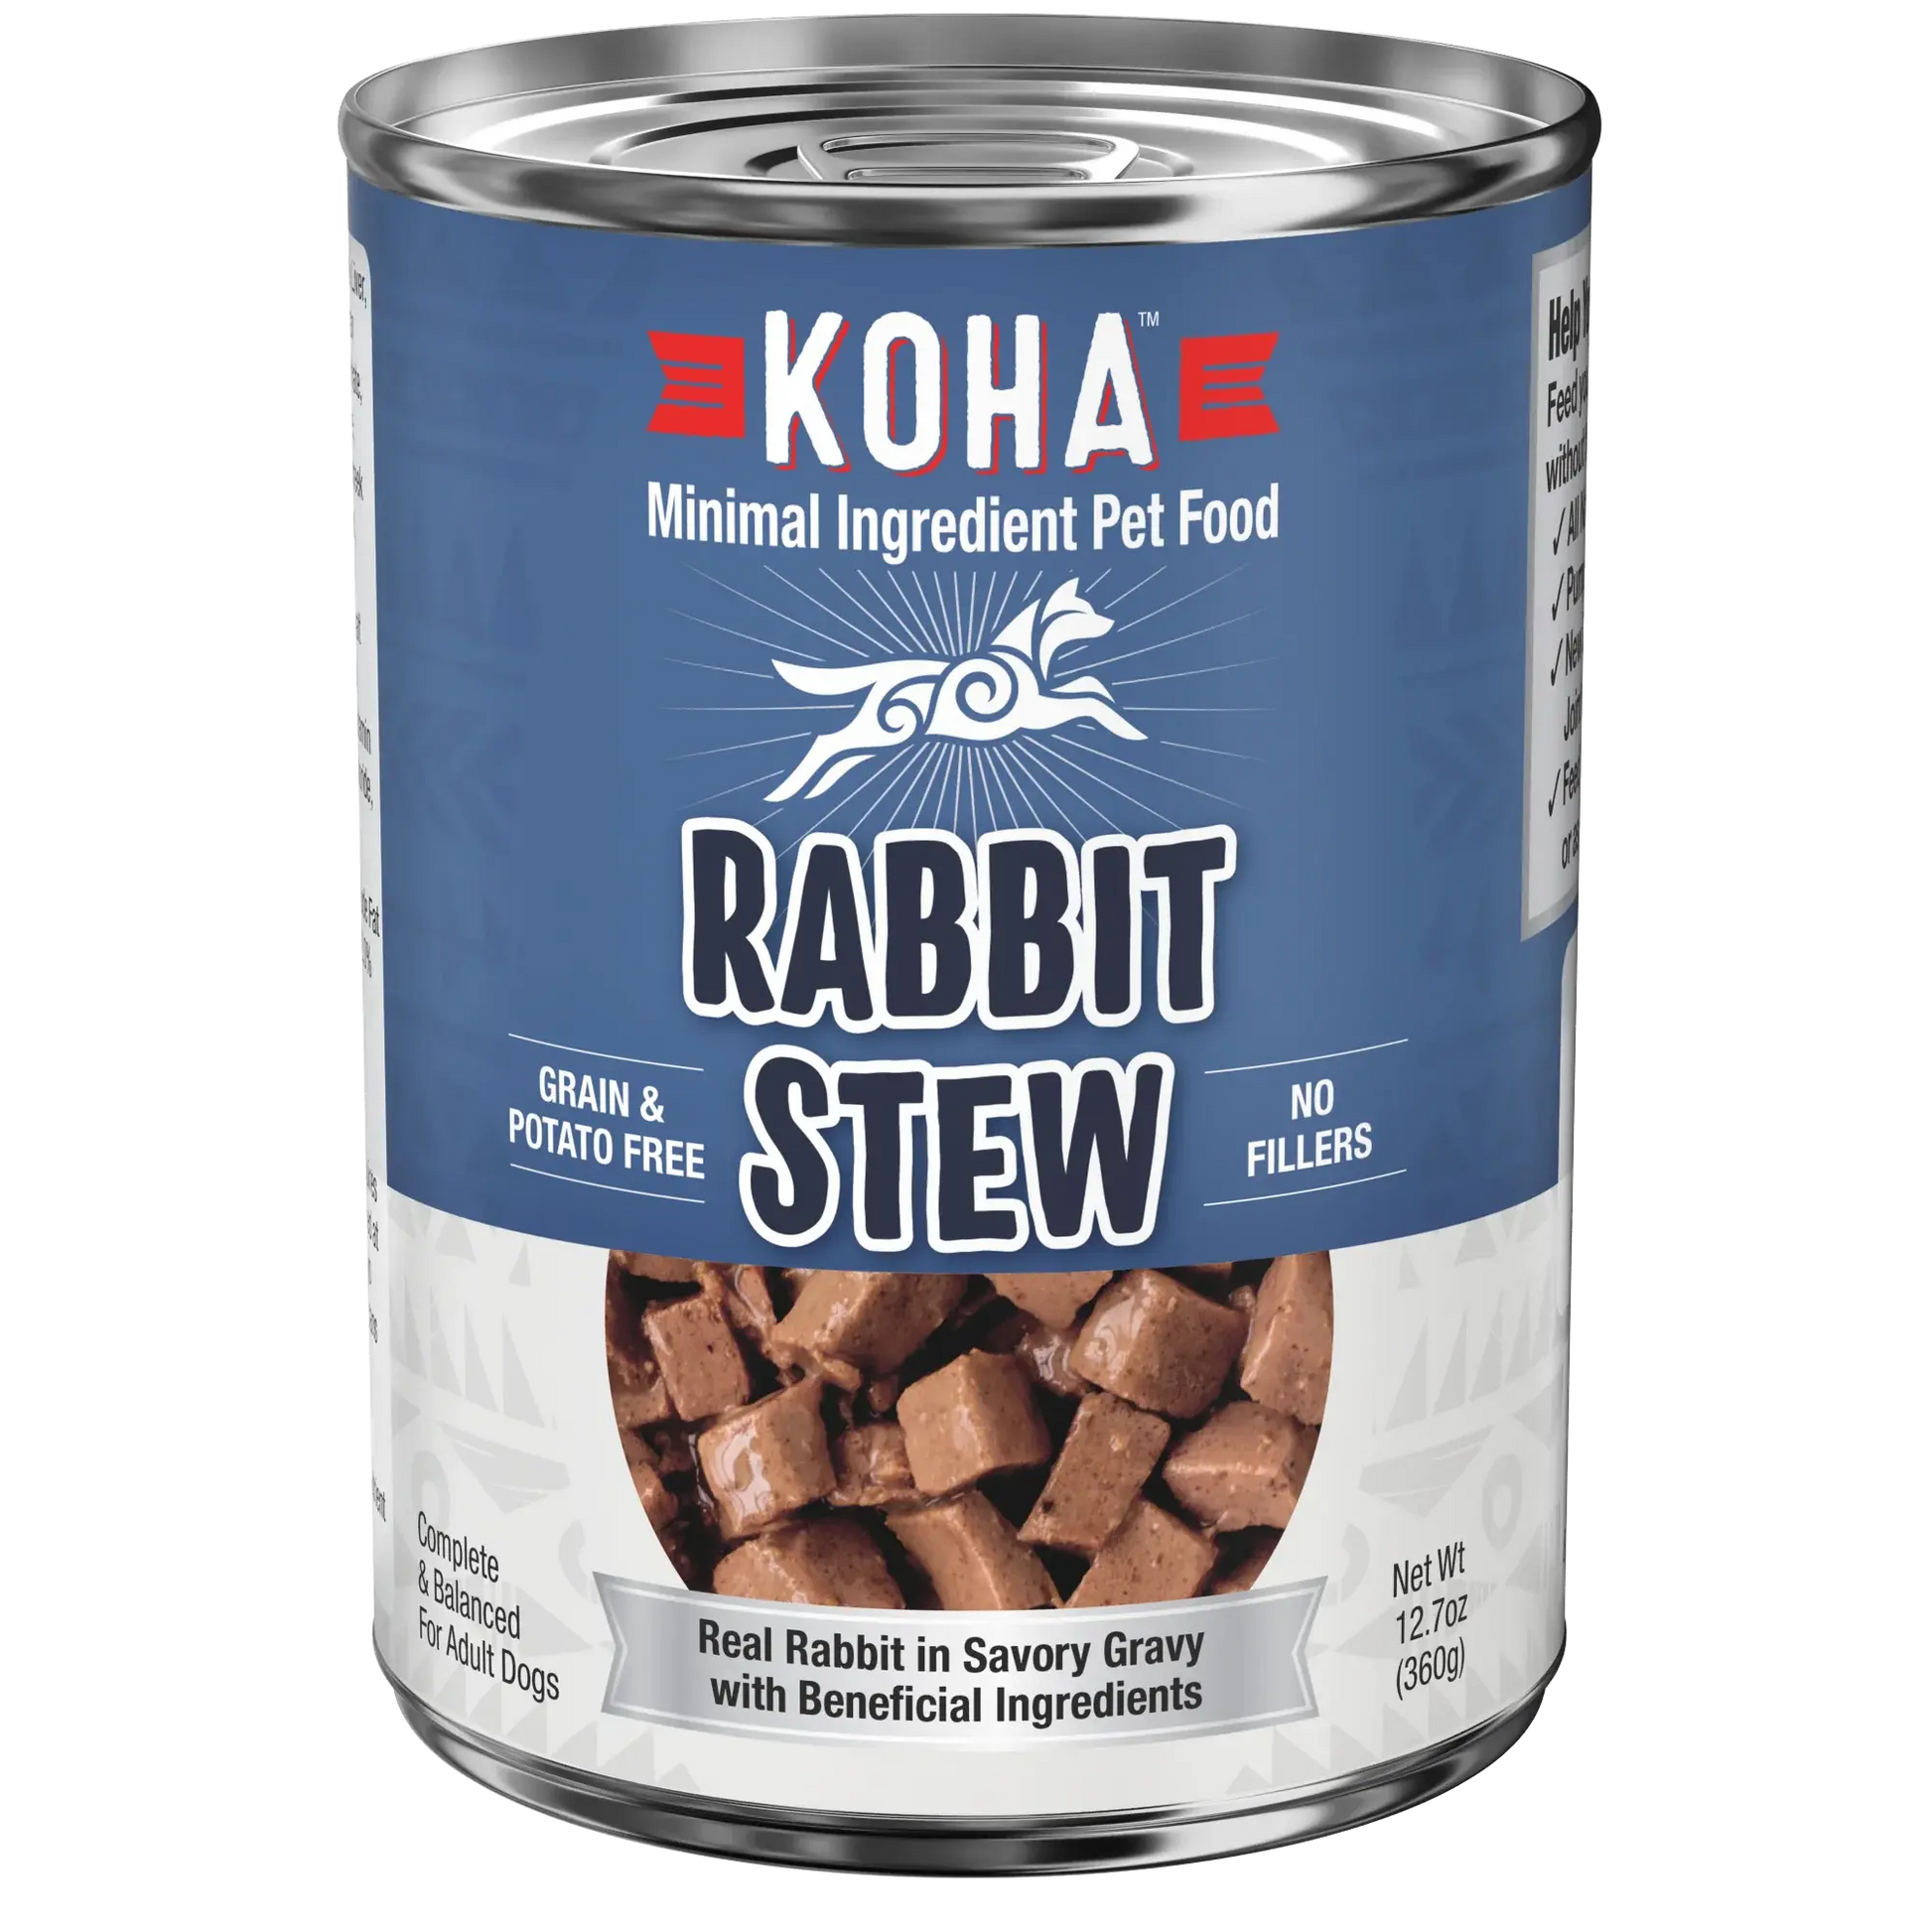 KOHA Minimal Ingredient Rabbit Stew for Dogs 12.7oz cans case of 12 KOHA